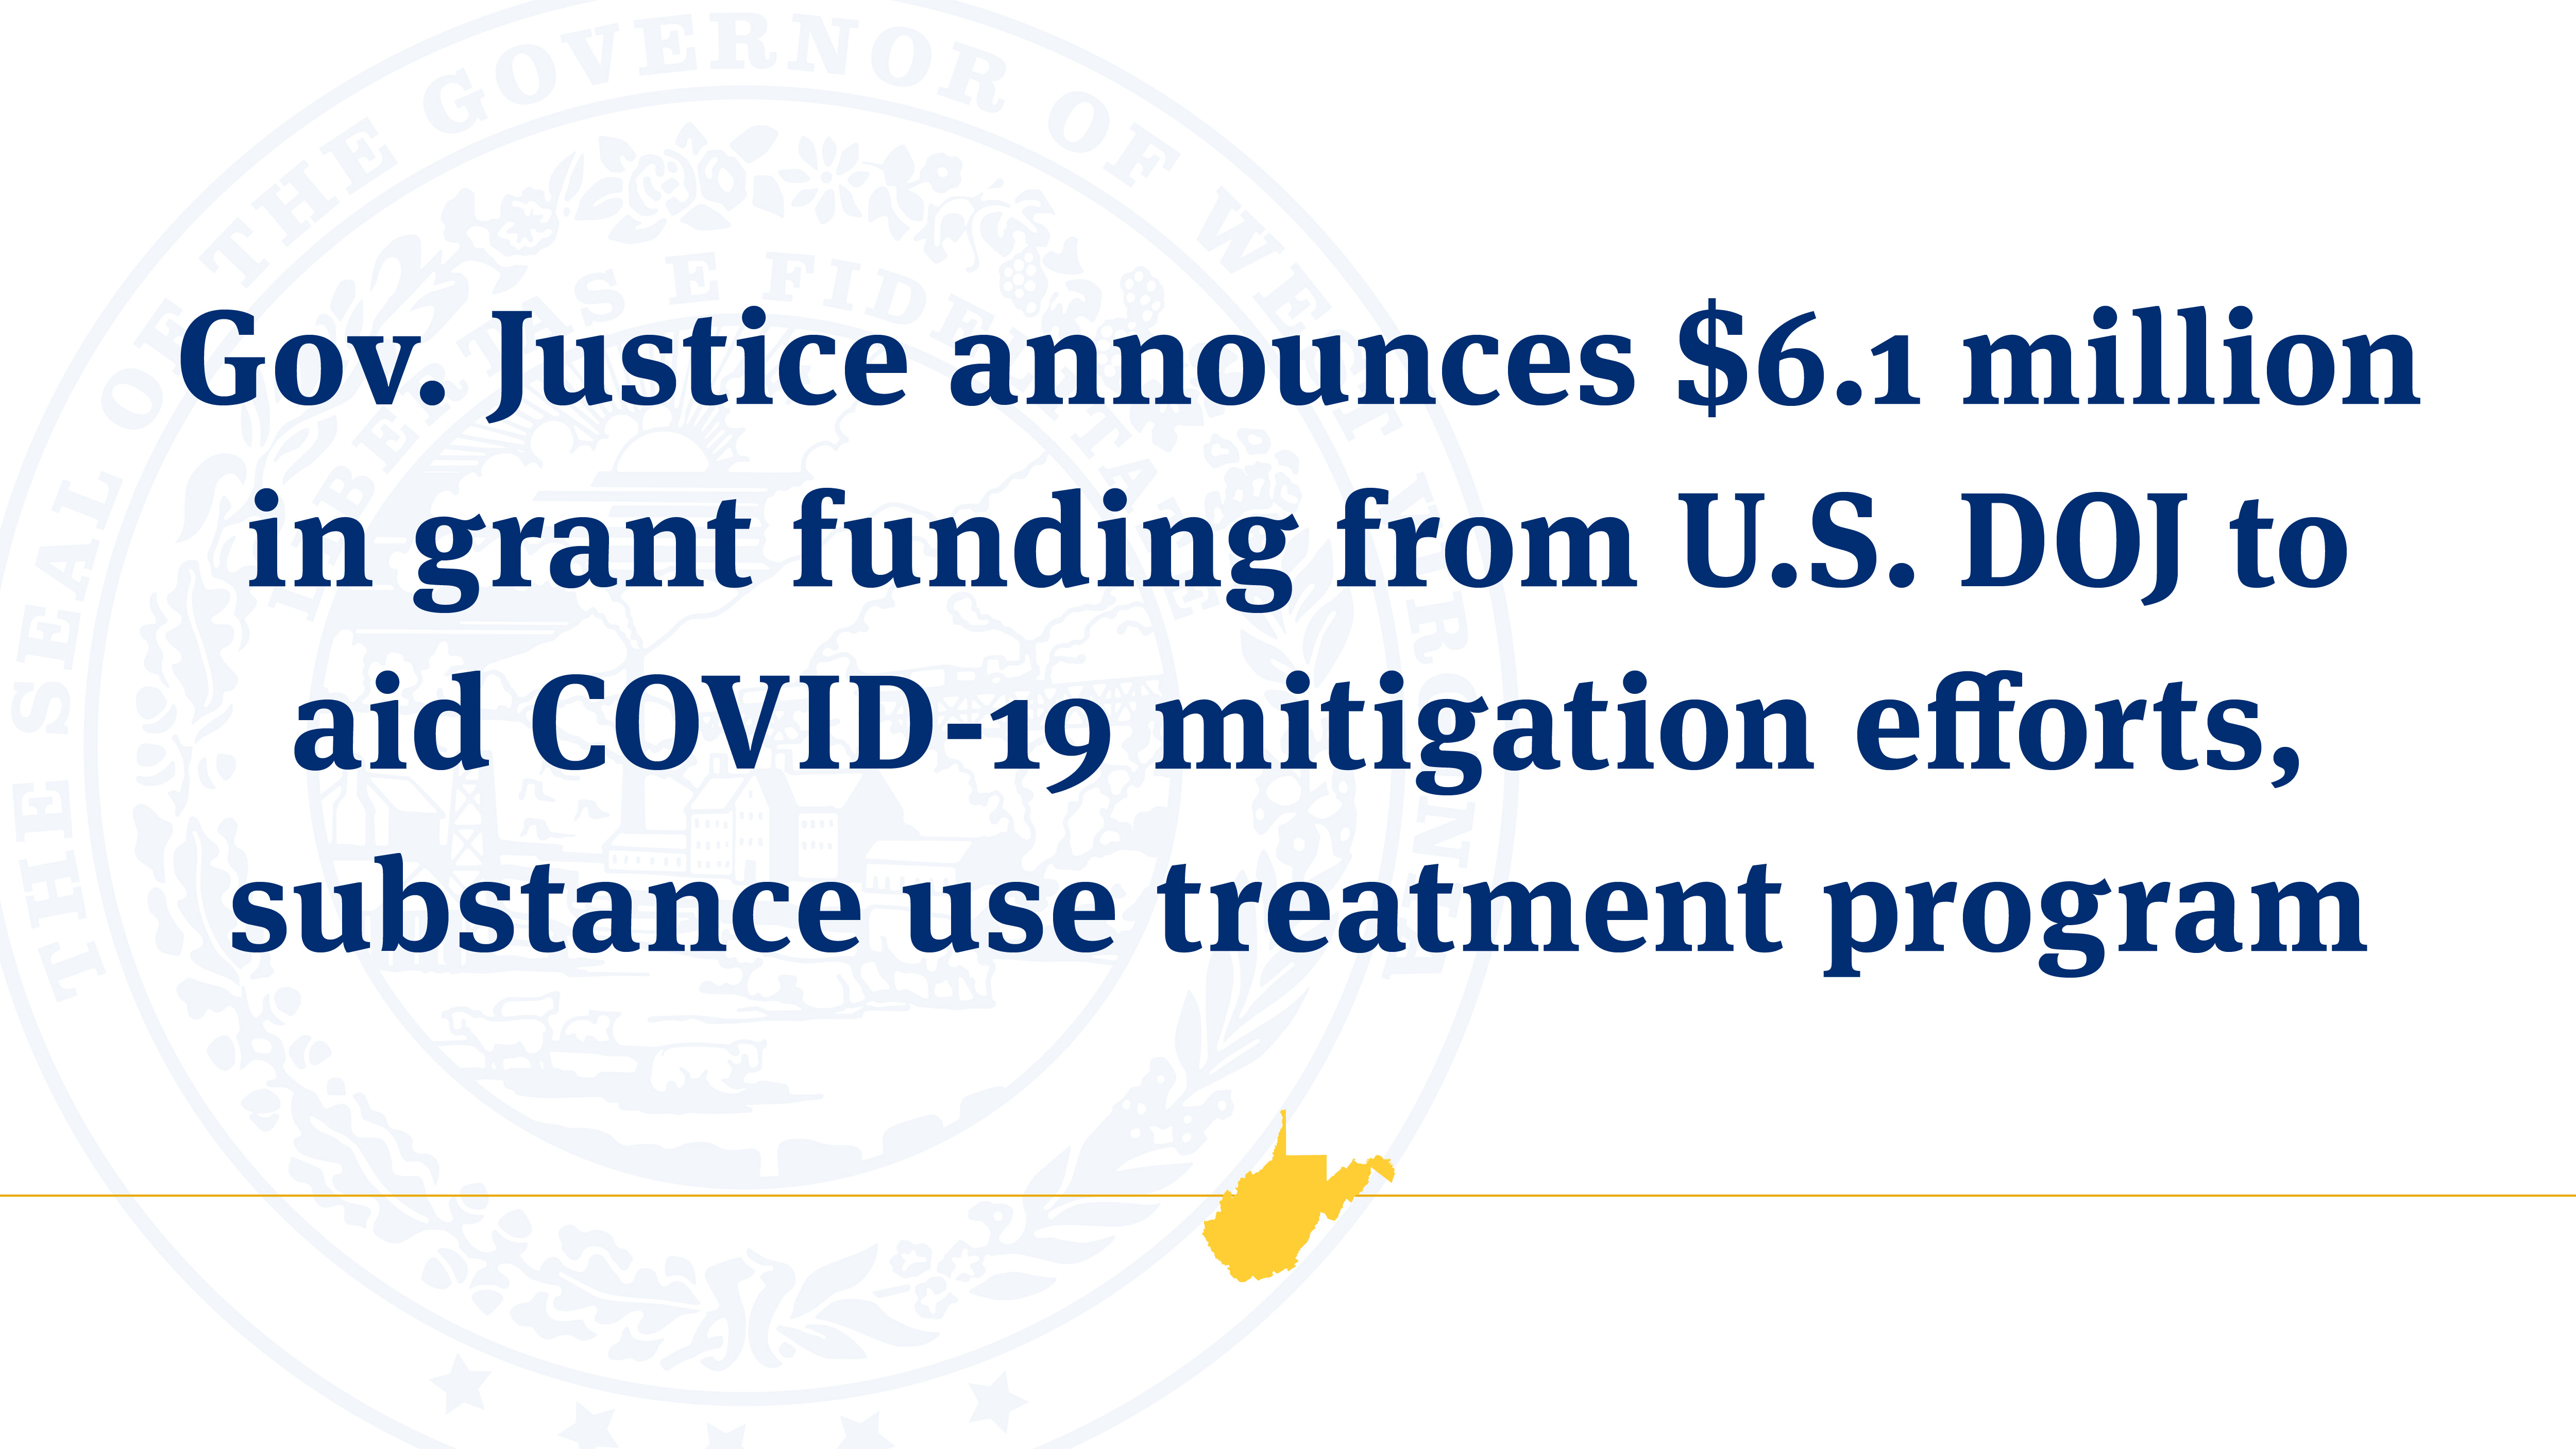 Gov. Justice announces 6.1 million in grant funding from U.S. DOJ to